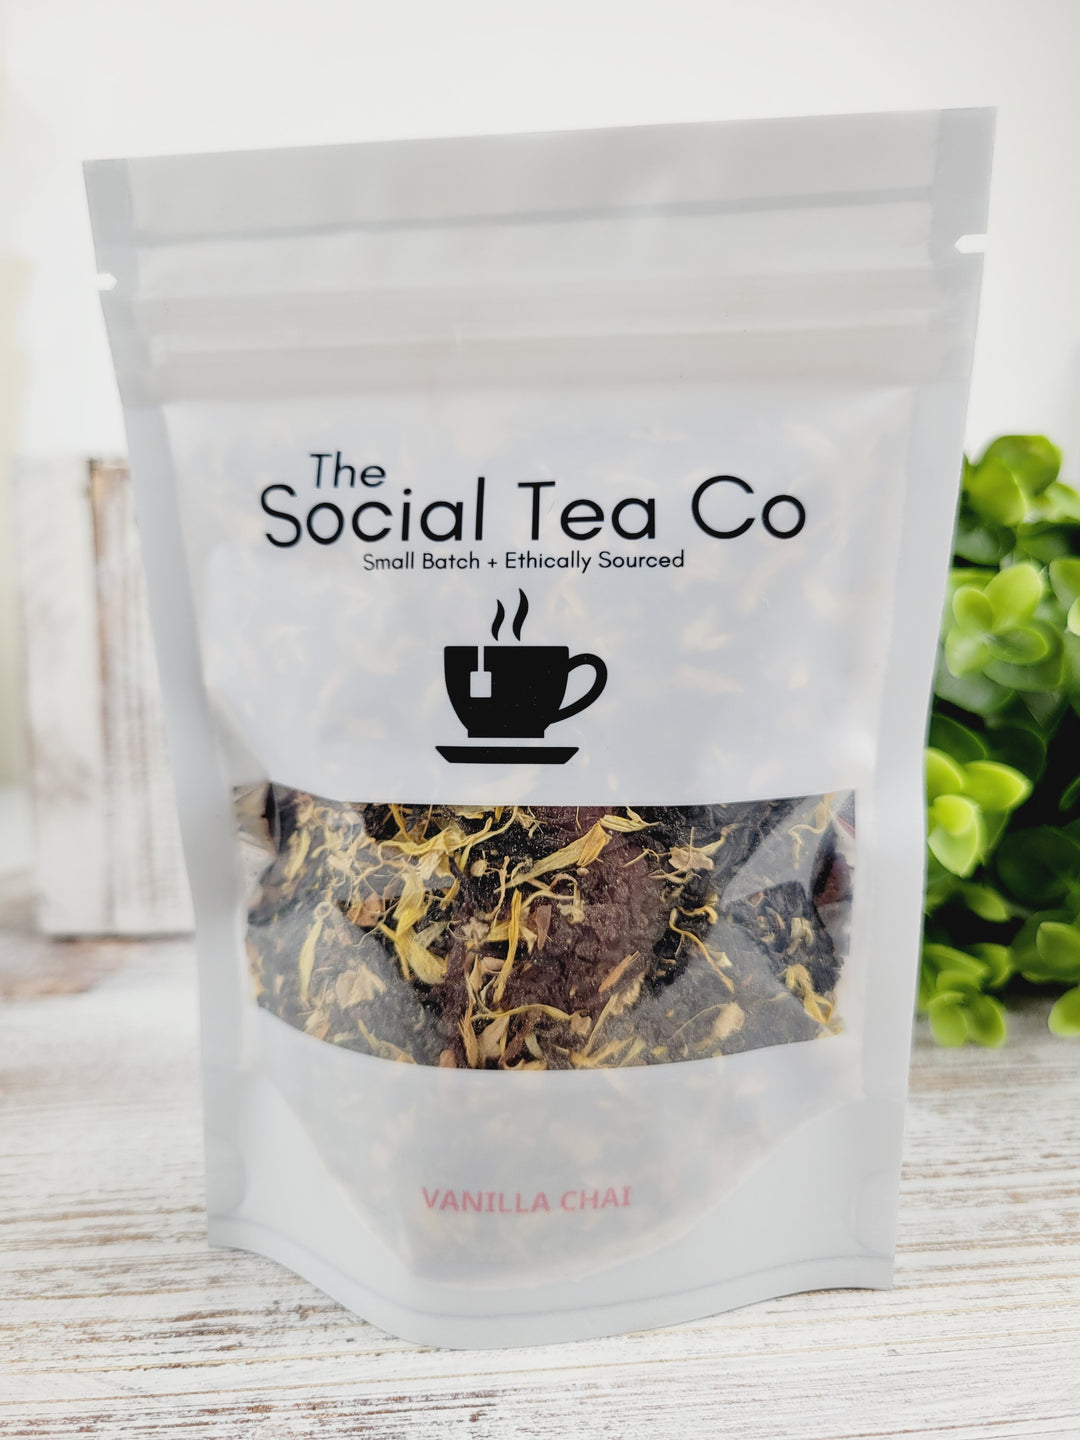 The Social Tea Co., Loose Leaf Teas